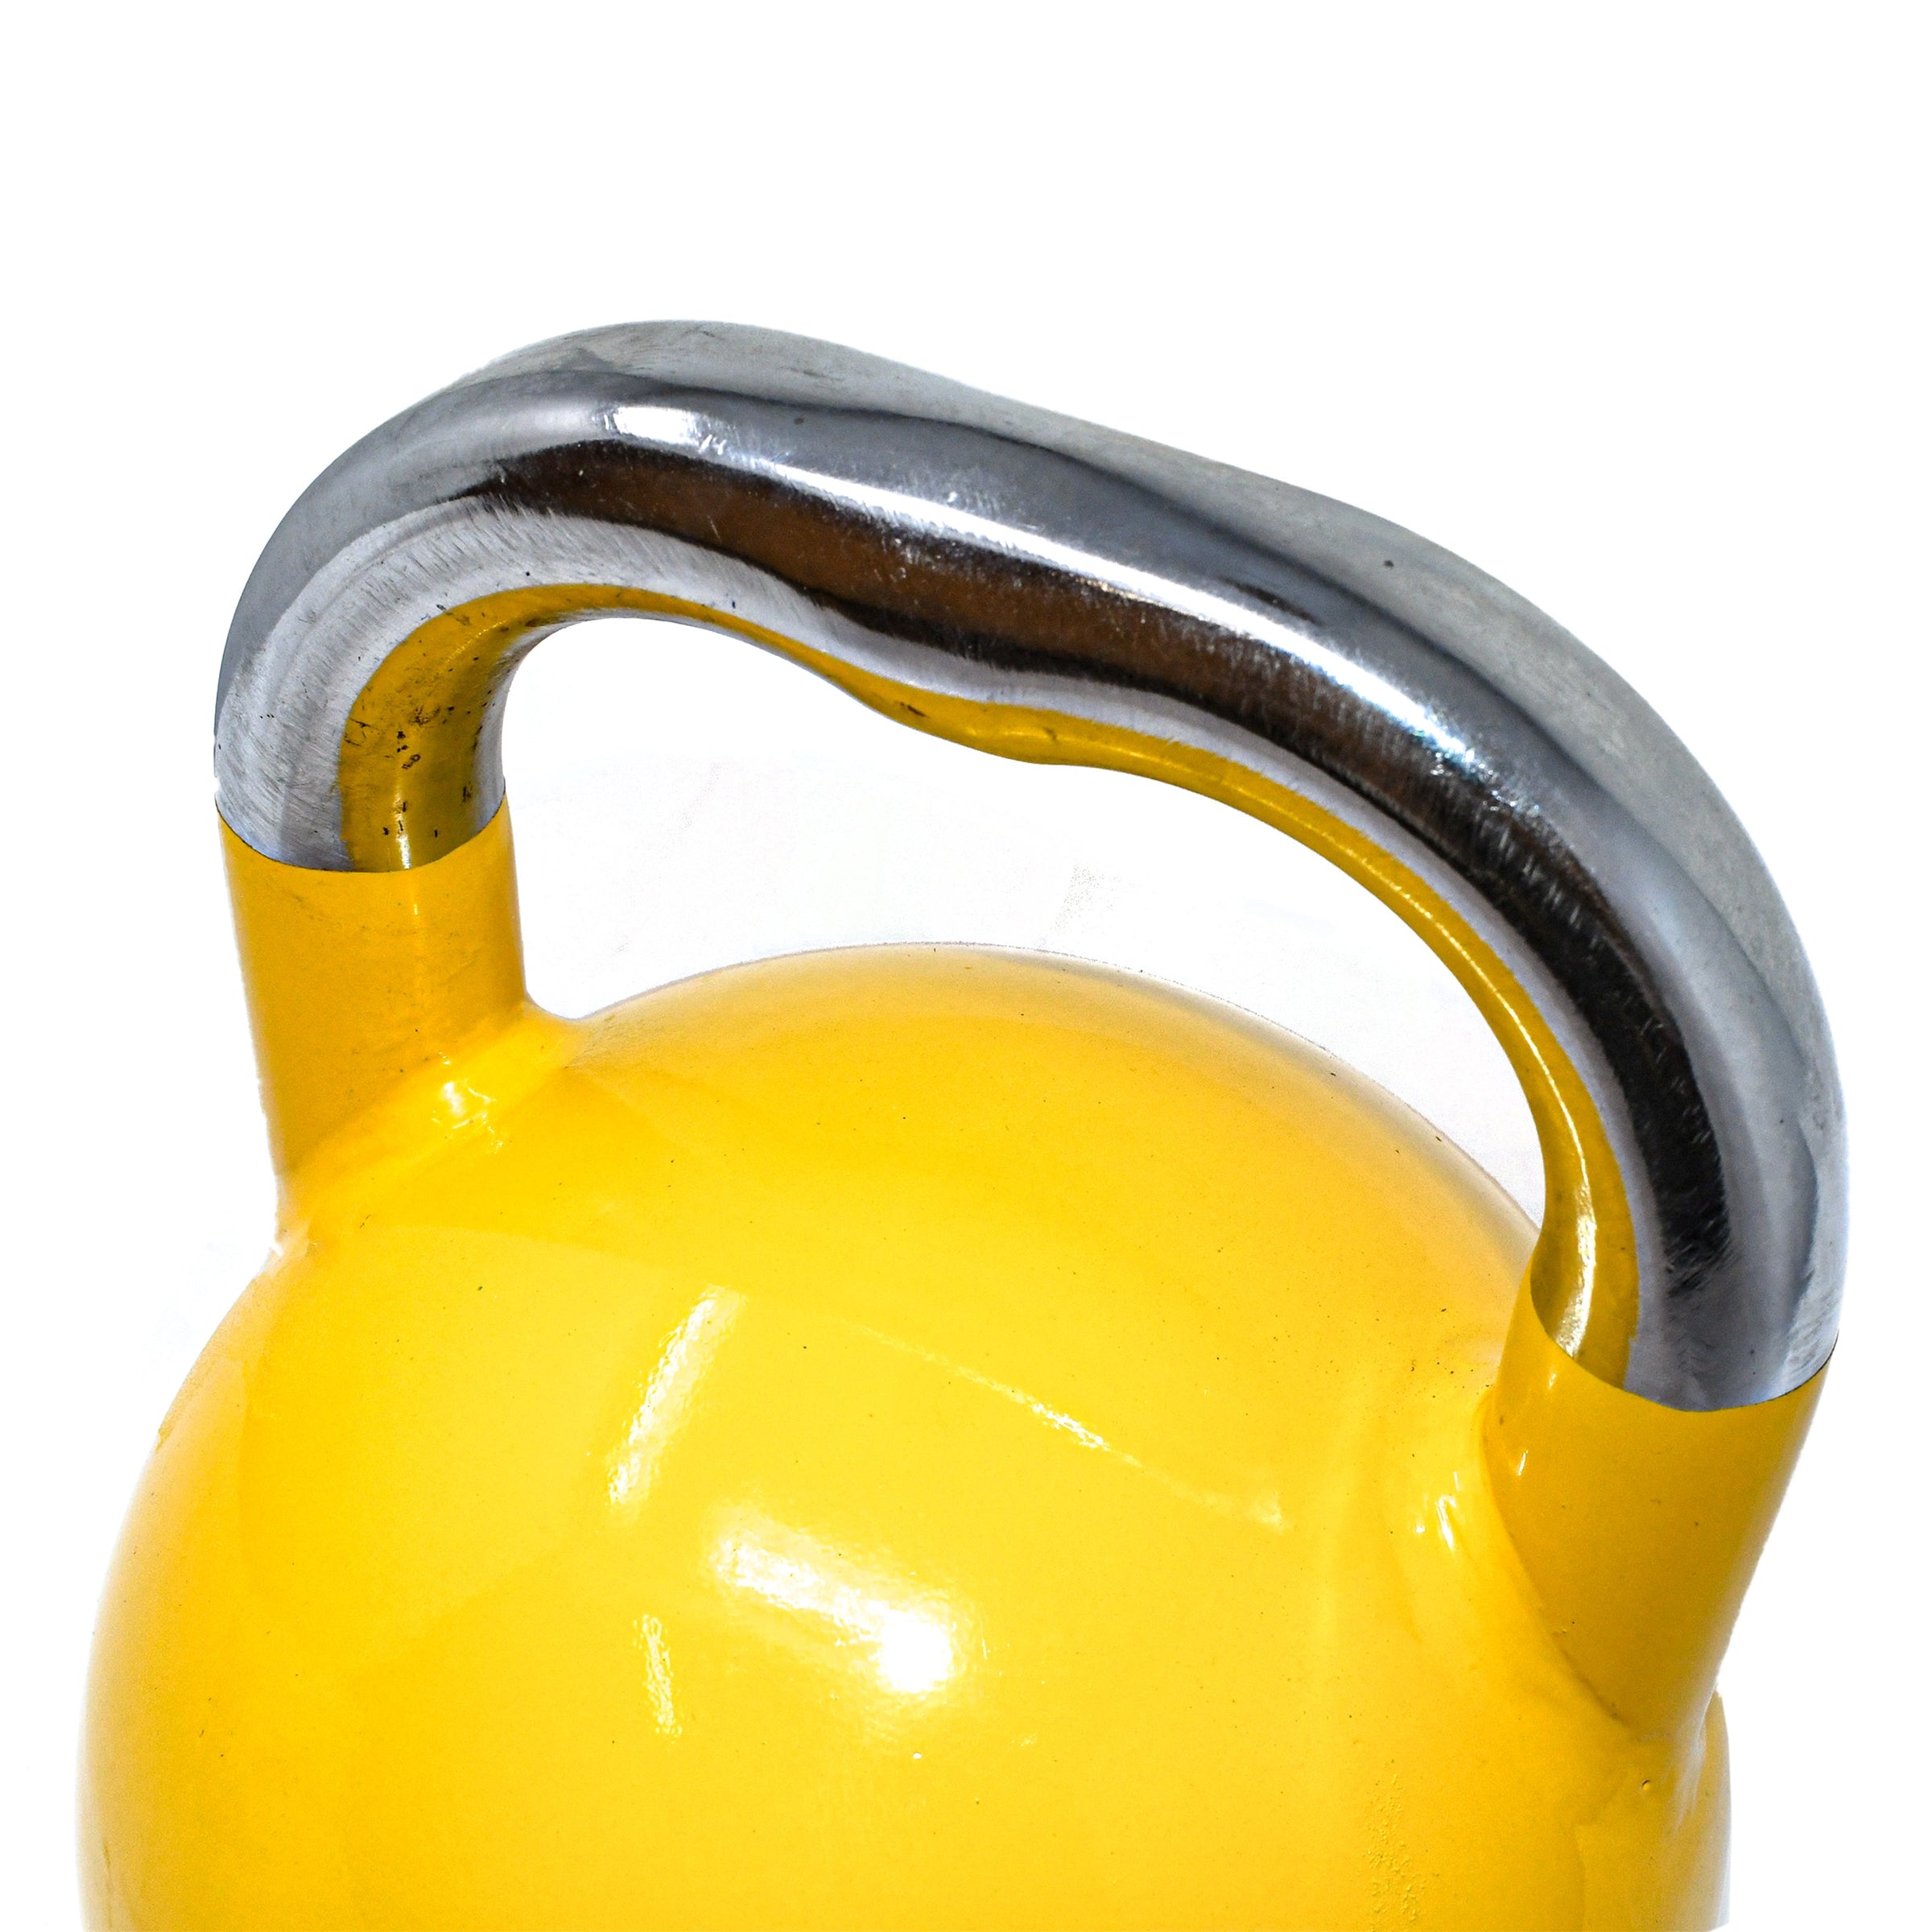 Premium Coated Steel Kettlebell - 35 lbs (16 kg) - Yellow